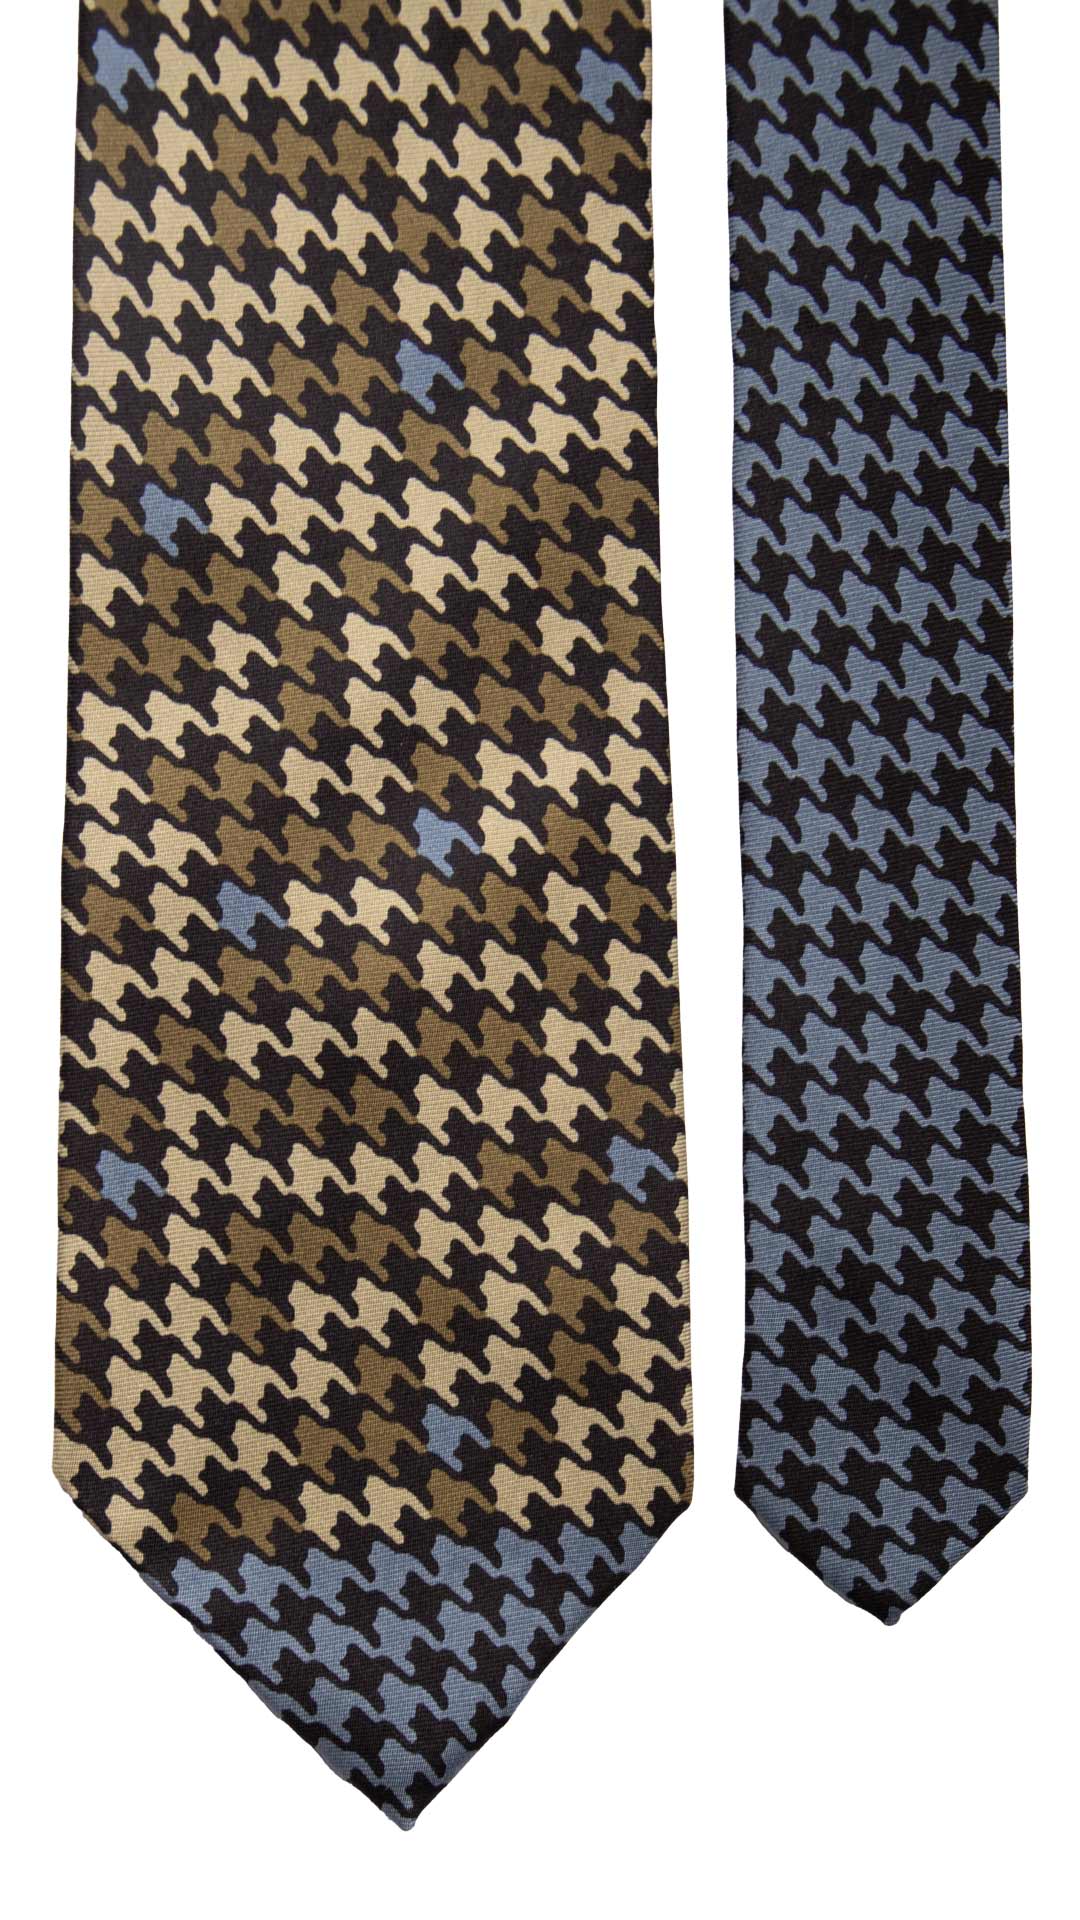 Cravatta Vintage in Twill di Seta Nera Pied de Poule Multicolor Nodo in Contrasto CV822 Pala